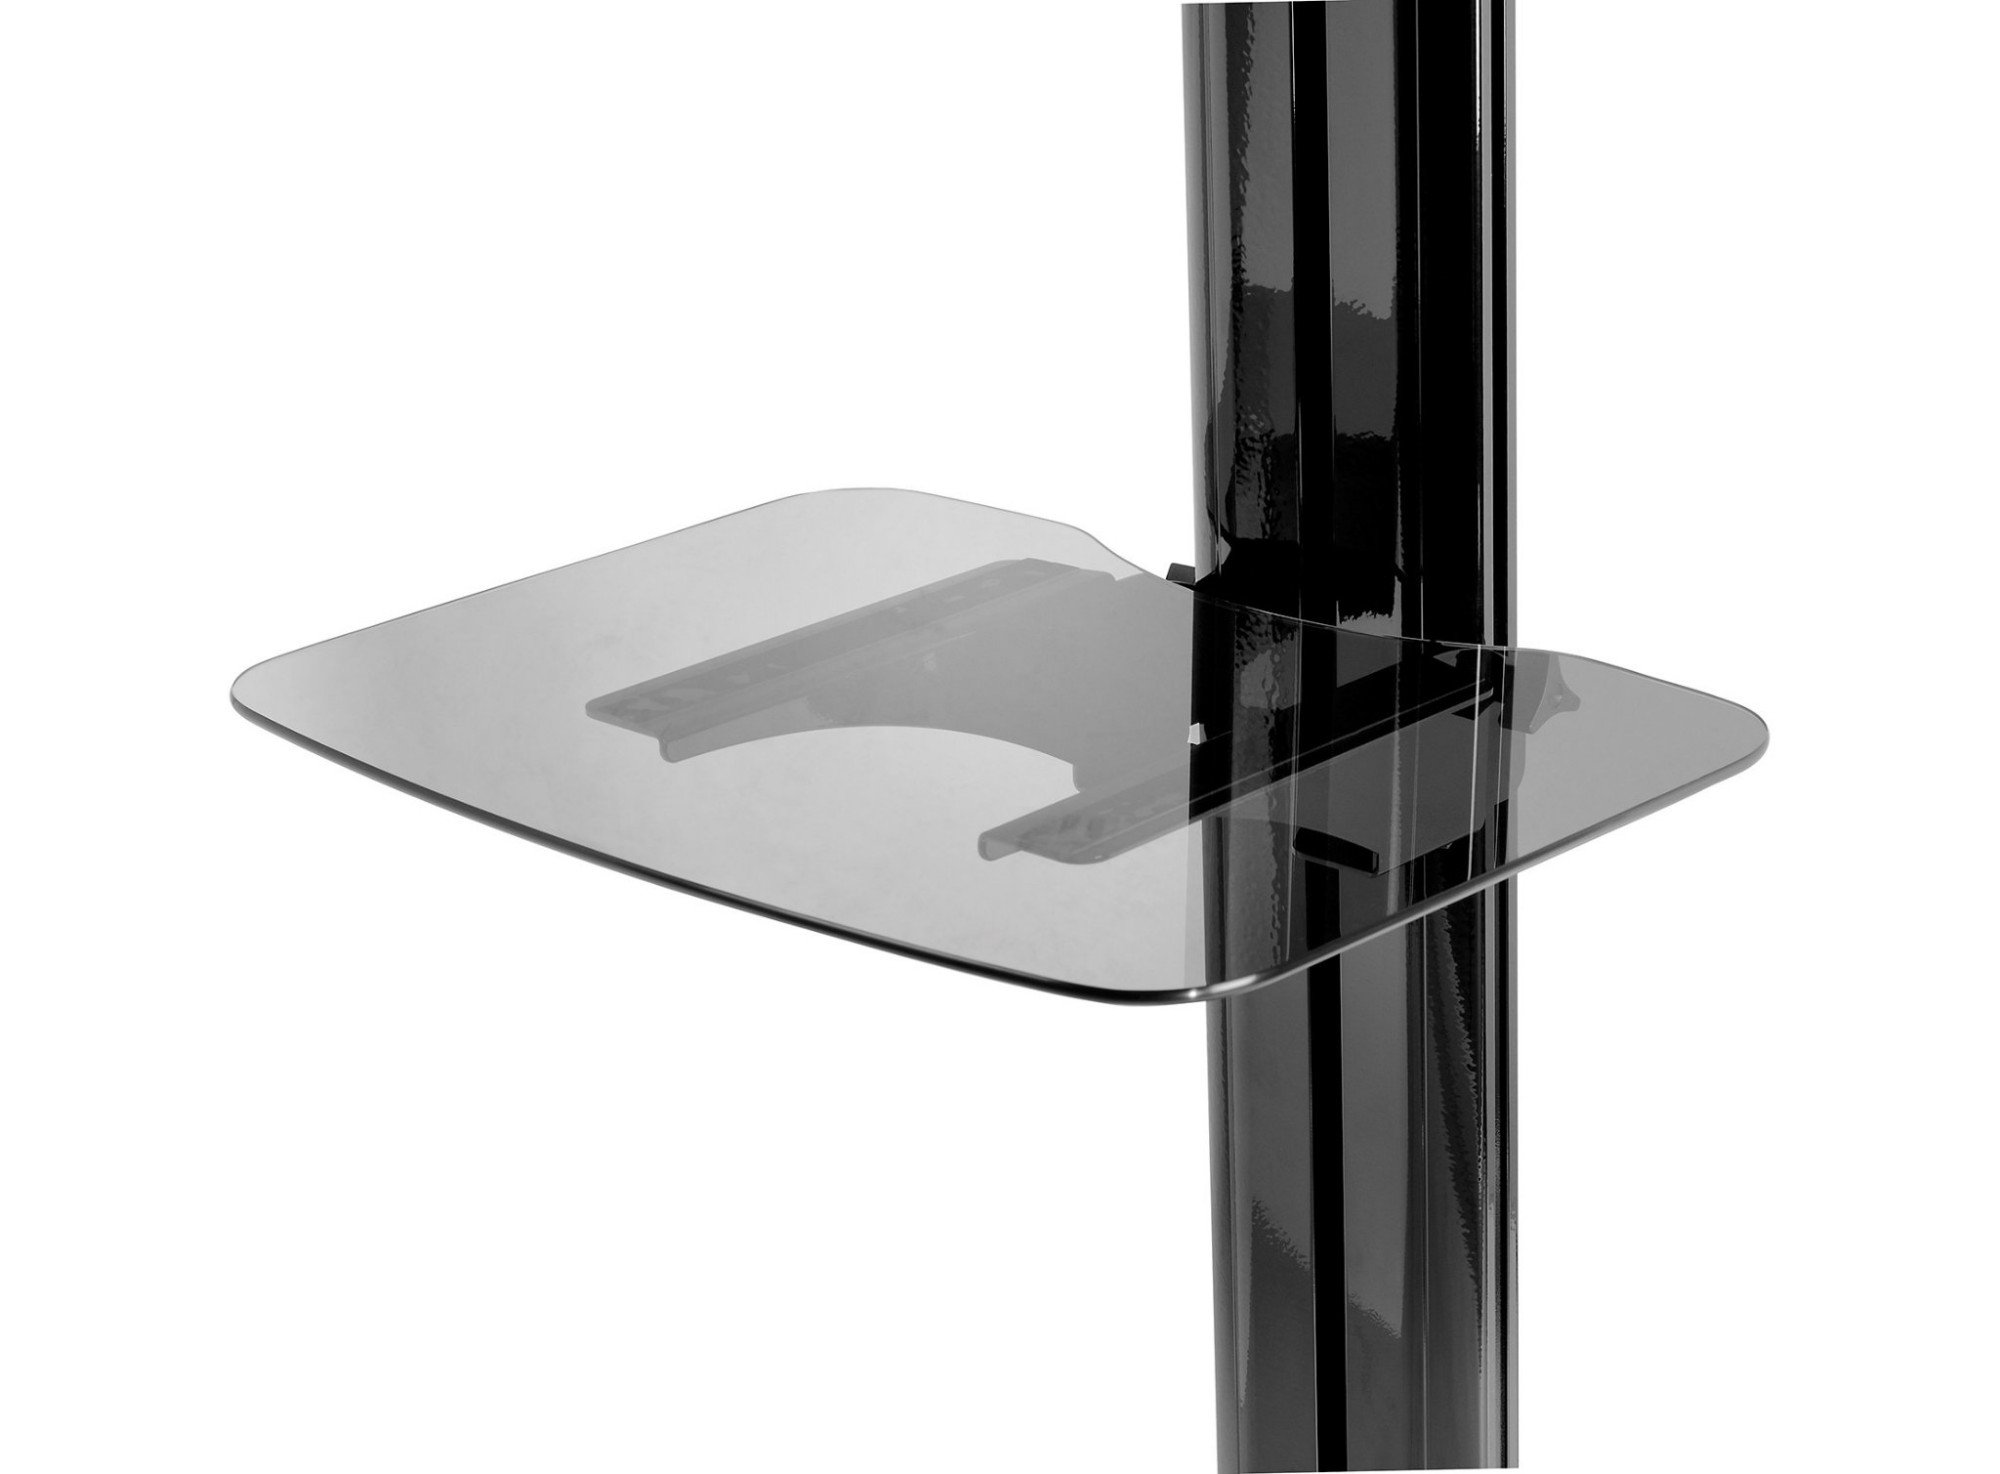 Peerless ACC-GS1 multimedia cart accessory Black Tempered glass Shelf